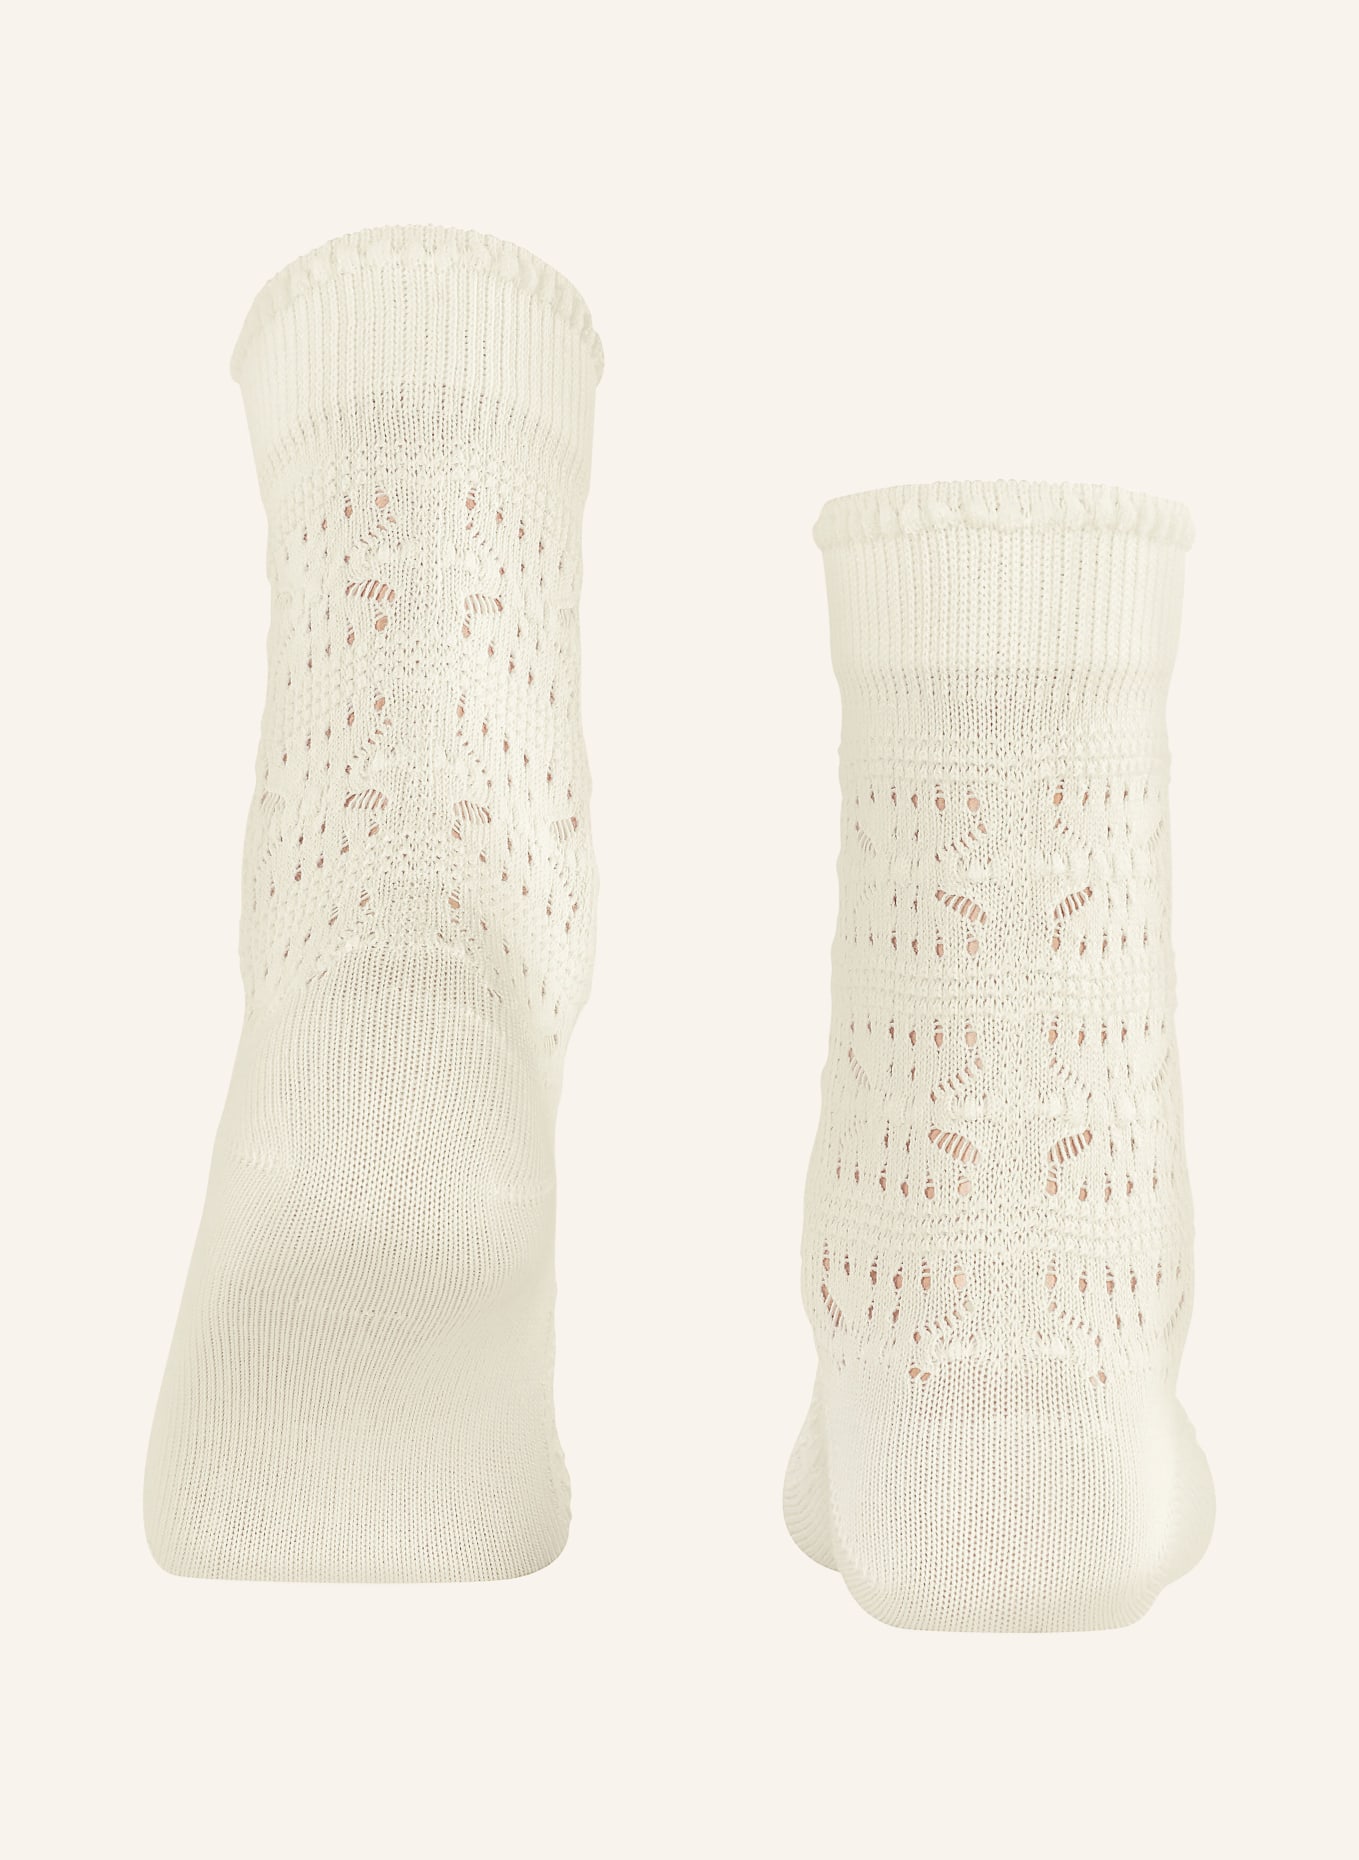 FALKE Socken GRANNY SQUARE, Farbe: 2010 off-white (Bild 2)